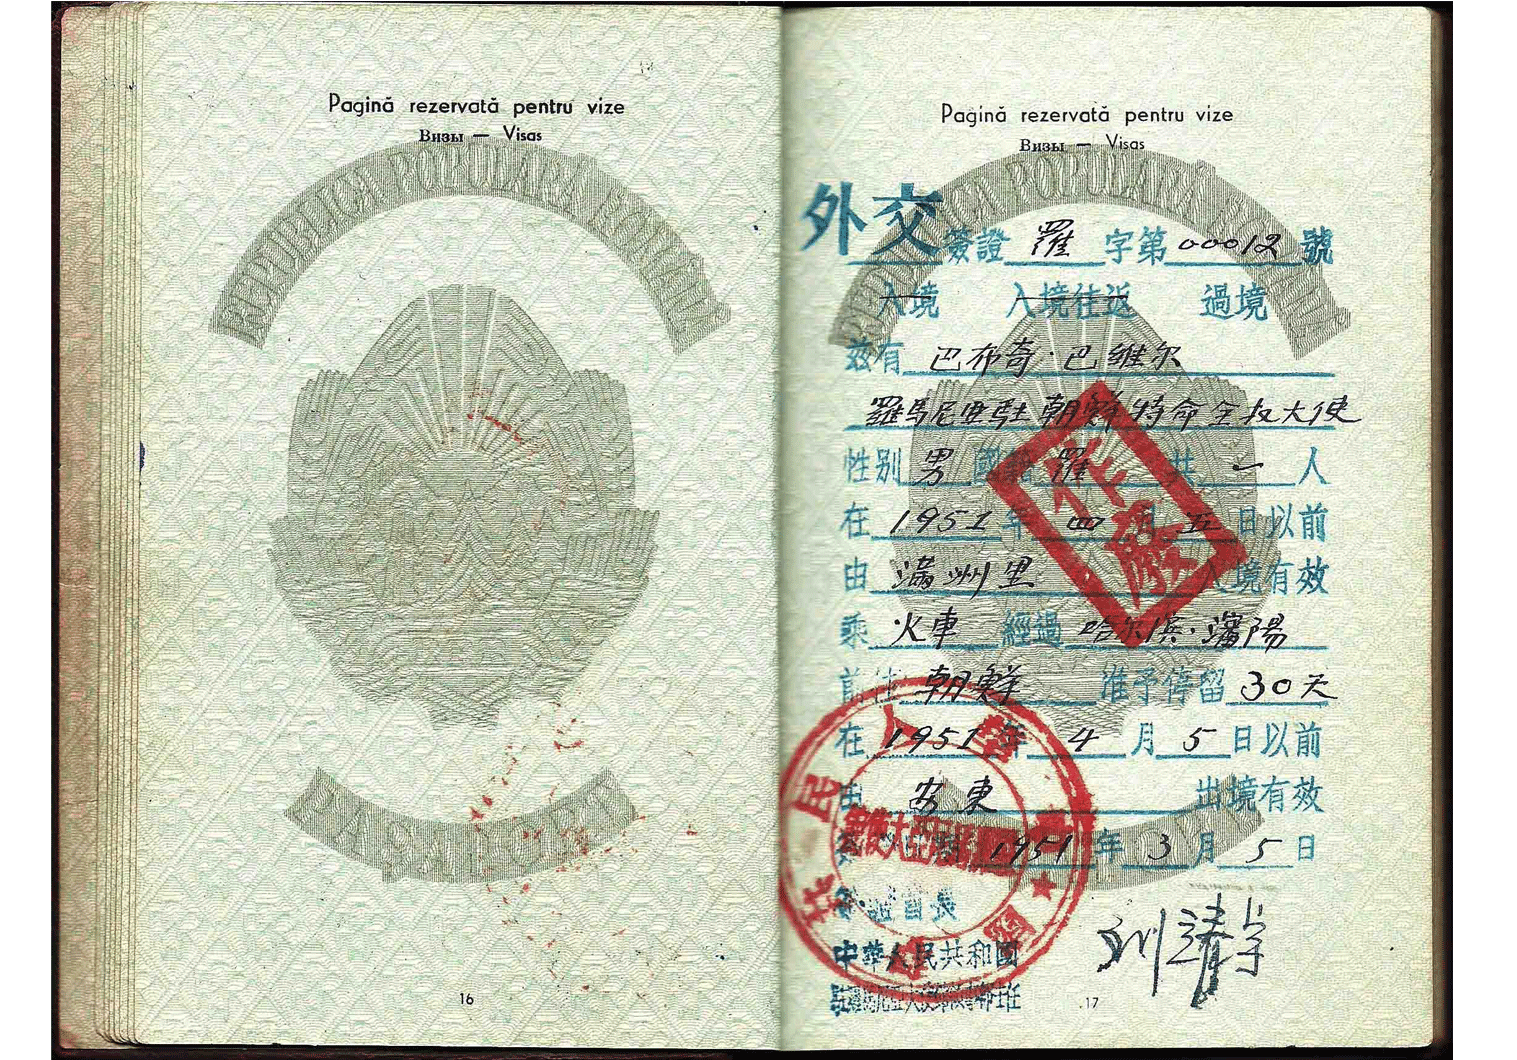 1951 Chinese diplomatic visa inside a passport